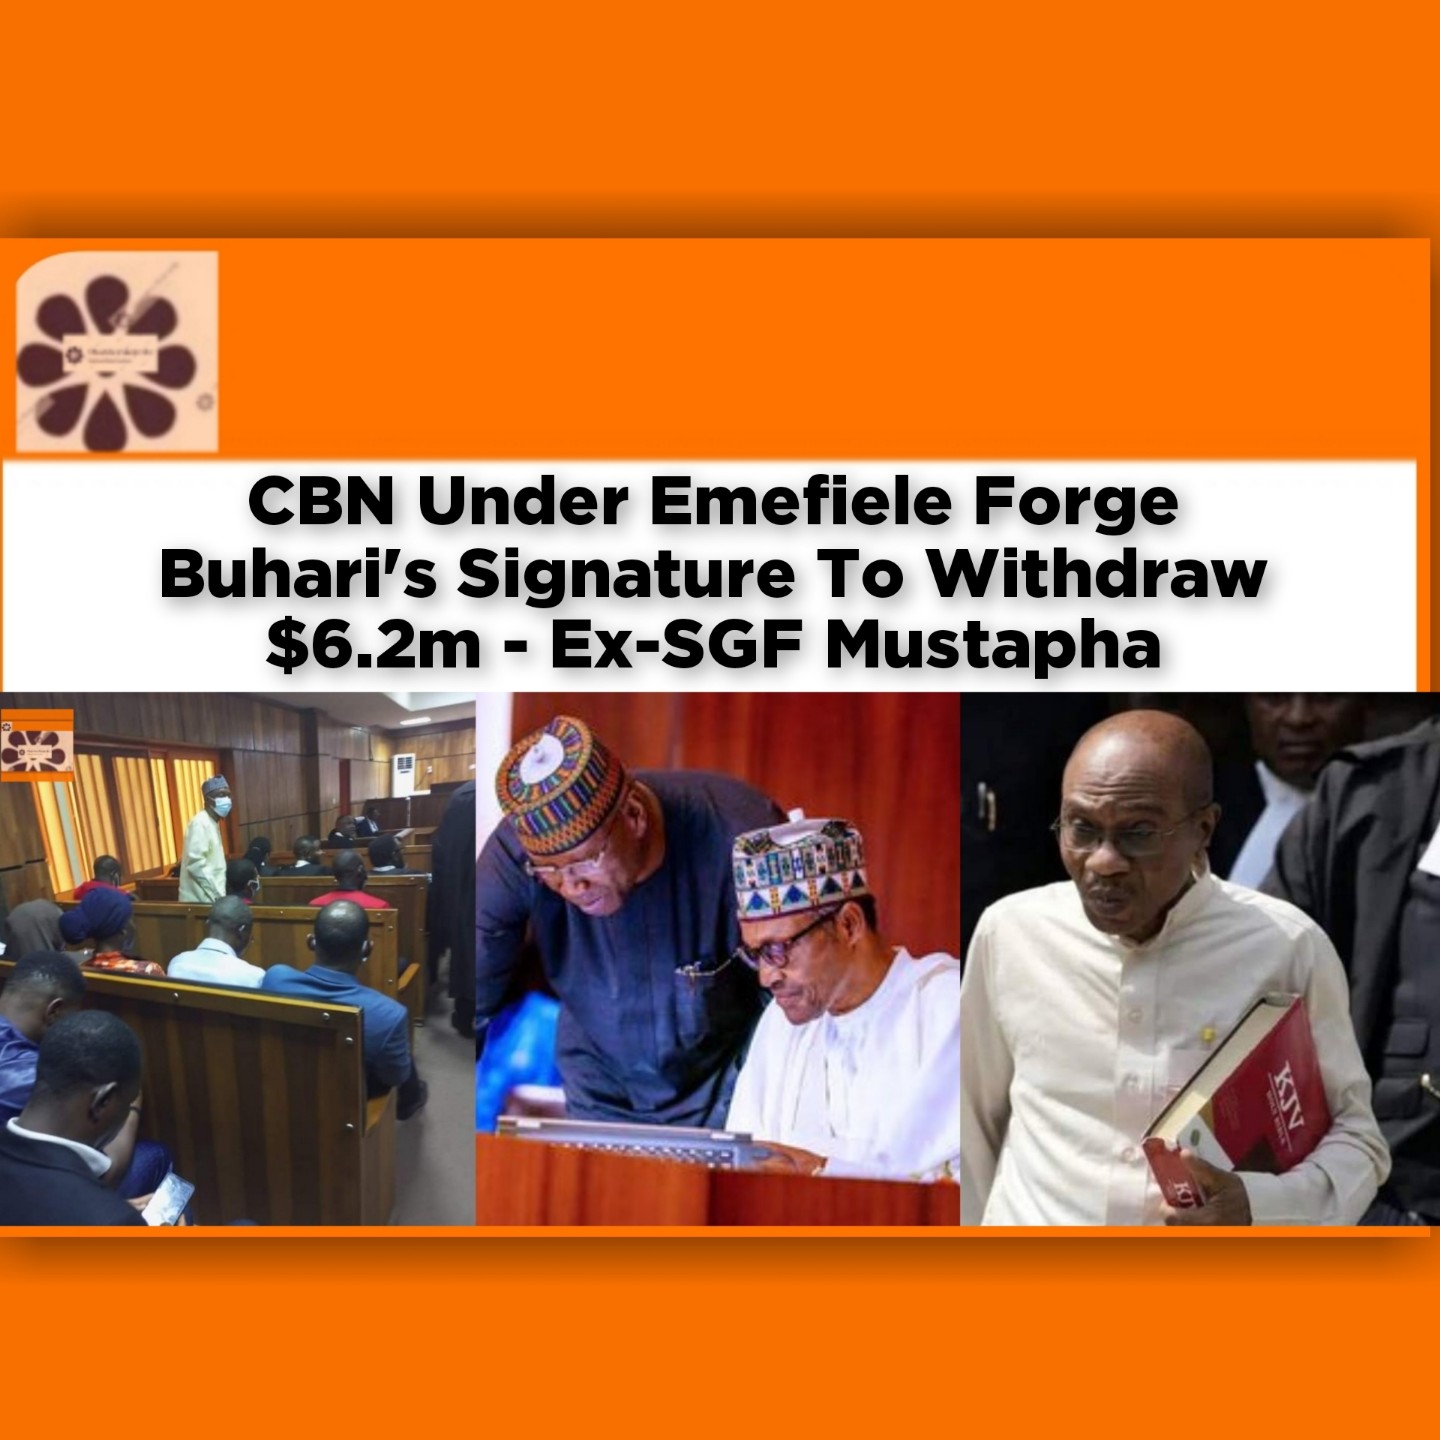 CBN Under Emefiele Forge Buhari's Signature To Withdraw $6.2m - Ex-SGF Mustapha ~ OsazuwaAkonedo #Boss #cbn #EFCC #Emefiele #Fraud #Godwin #Mustapha #Ocheme #Odoh